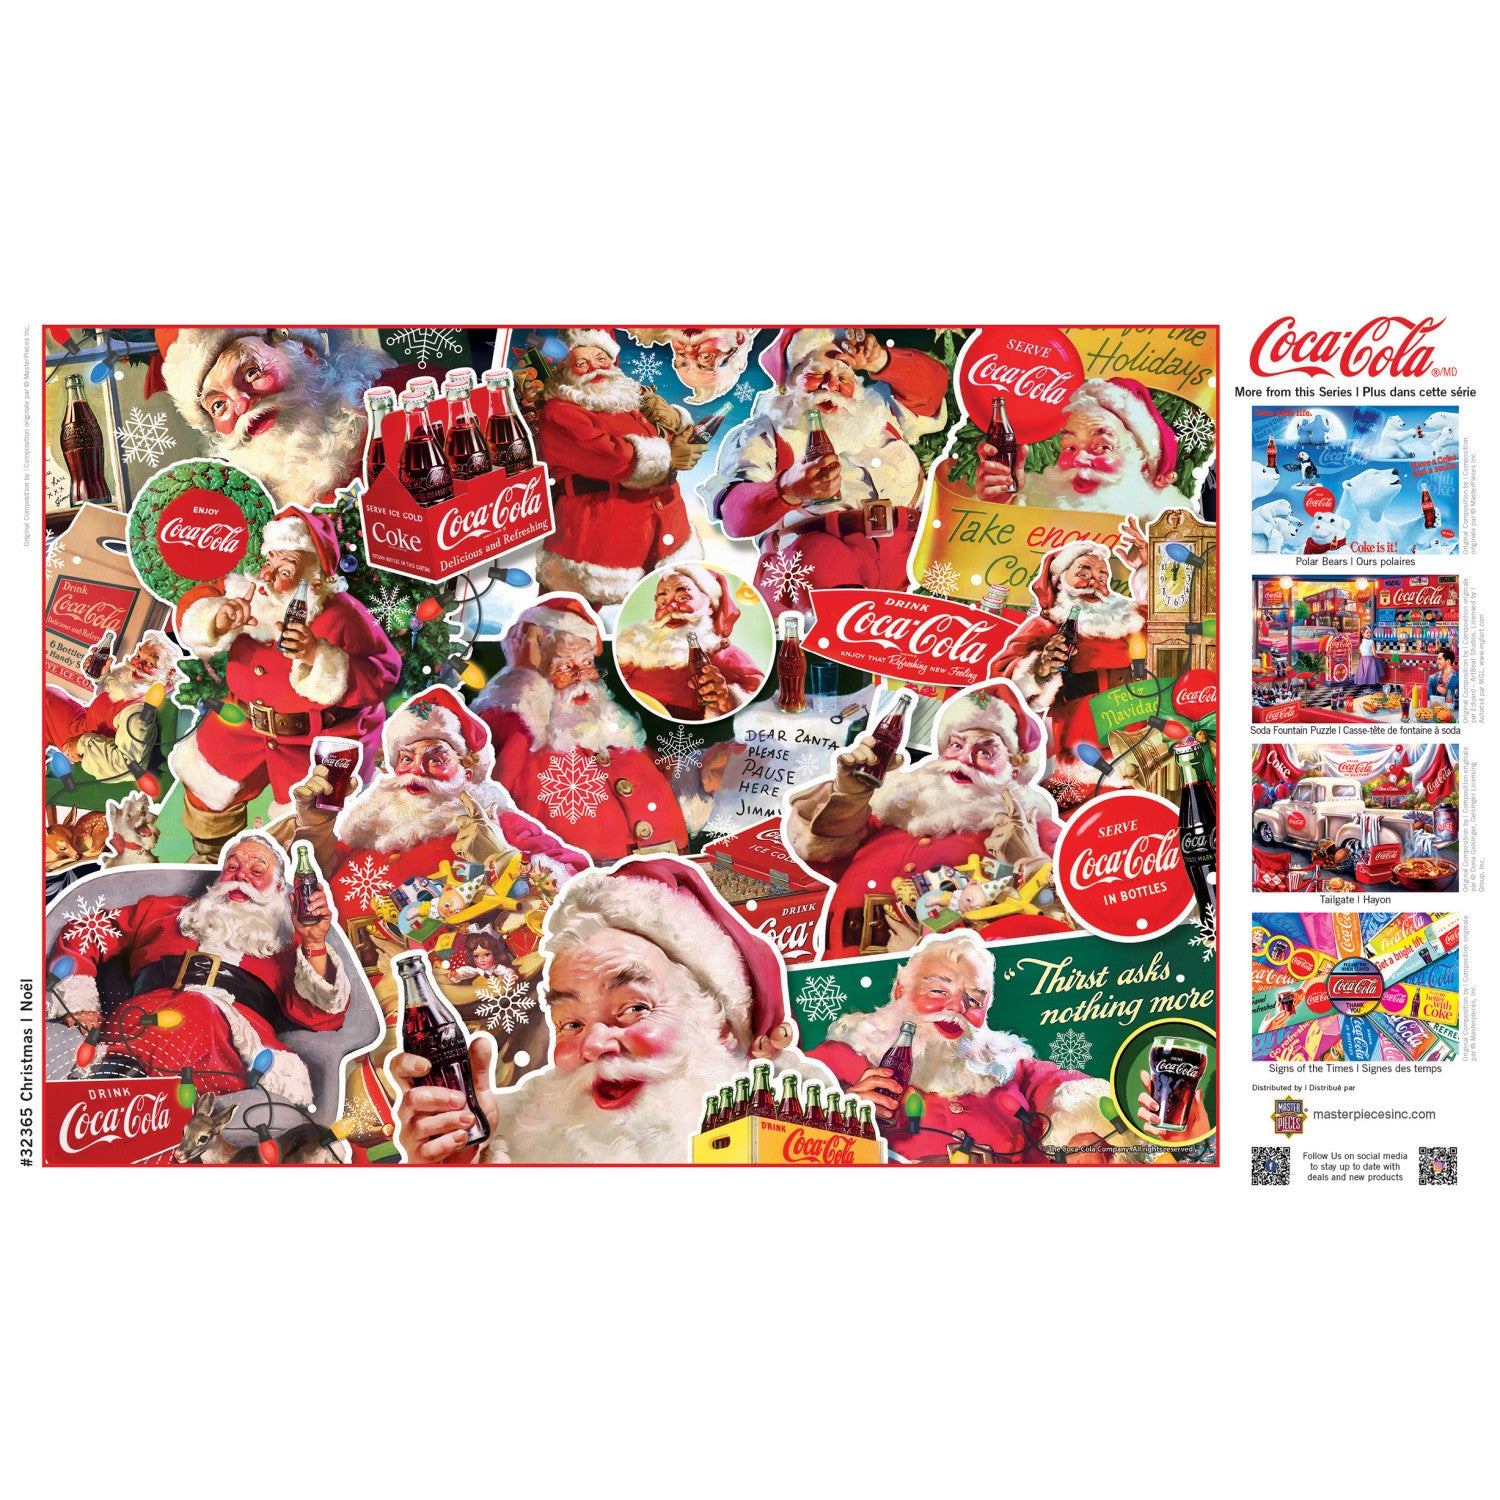 Coca-Cola Christmas - 500 Piece Jigsaw Puzzle